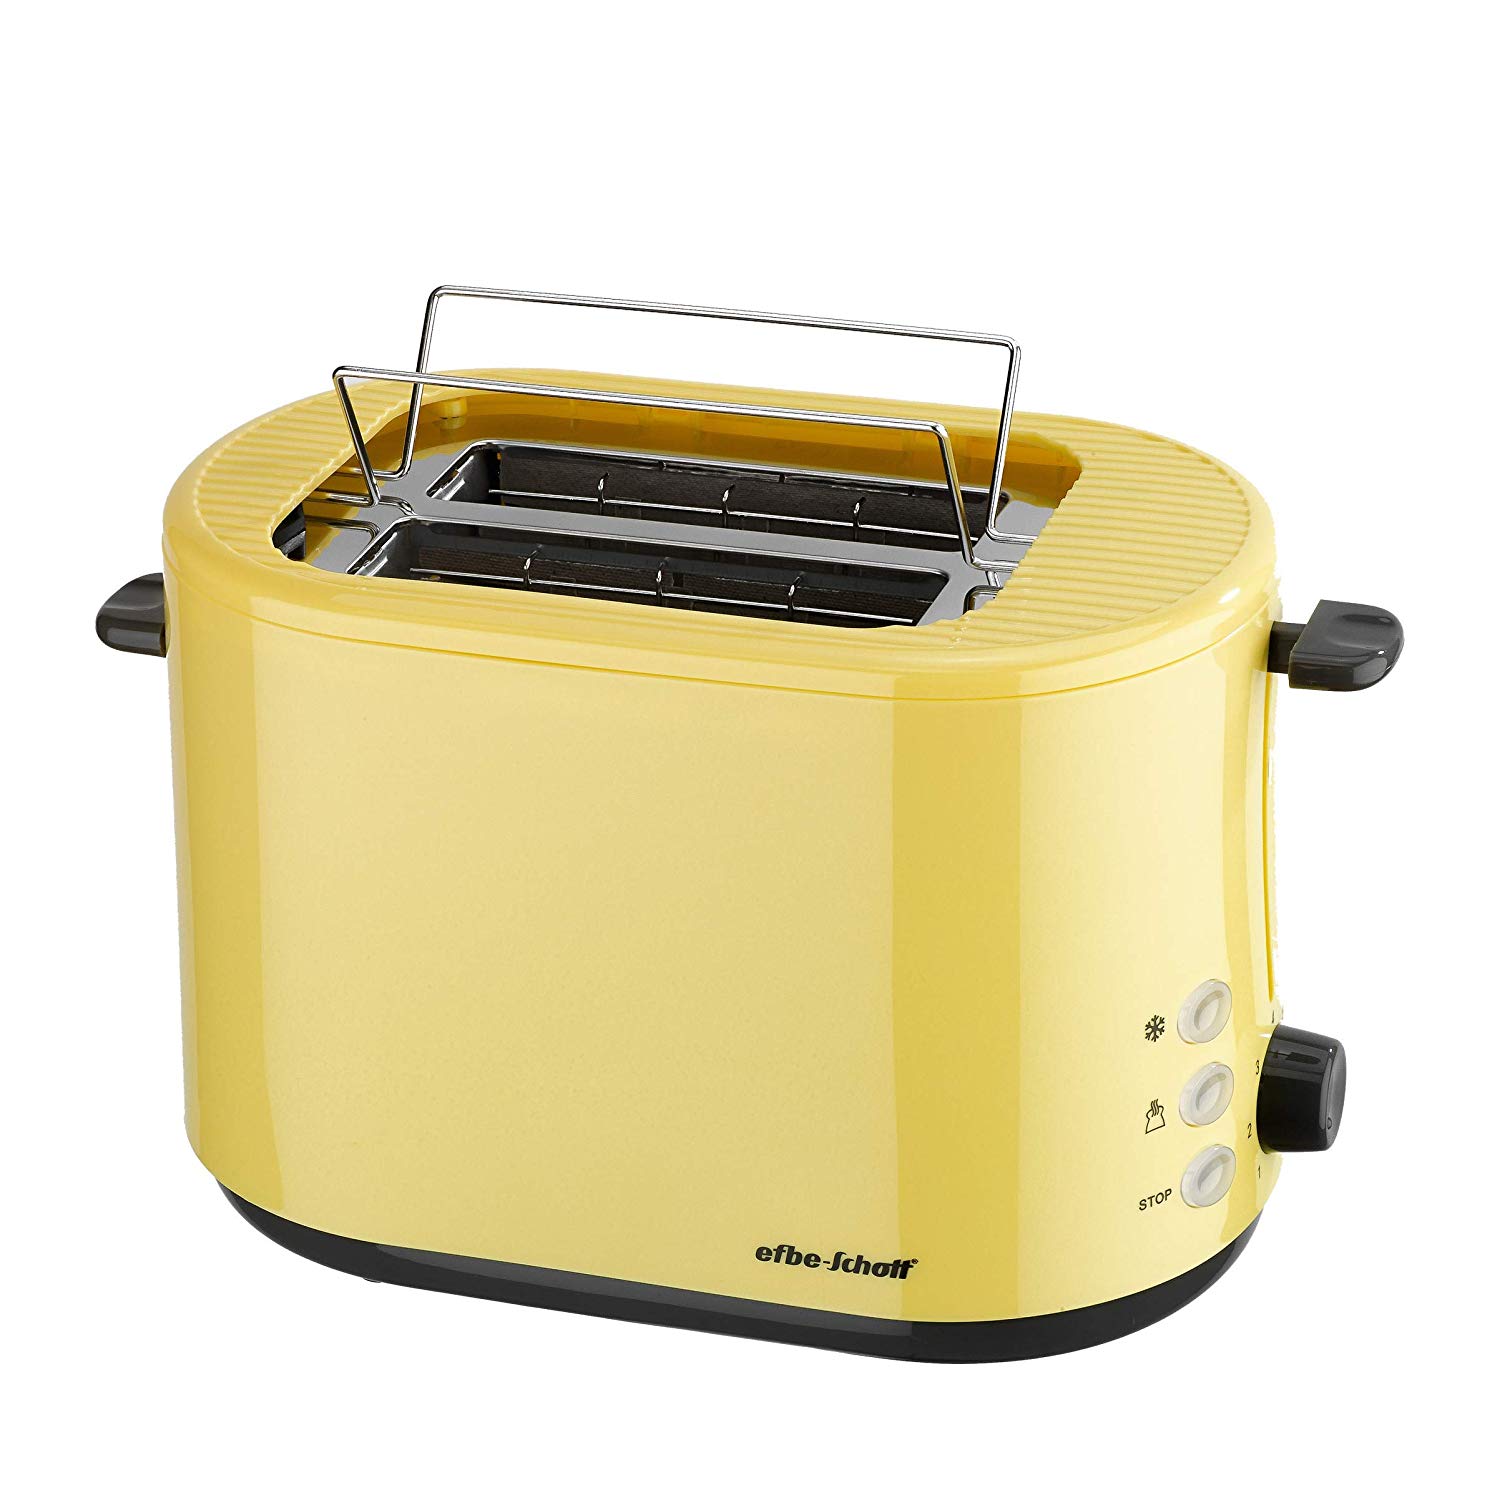 Efbe-Schott Sc To 1080.1 Glb Designer Toaster With Folding Bun Attachment M